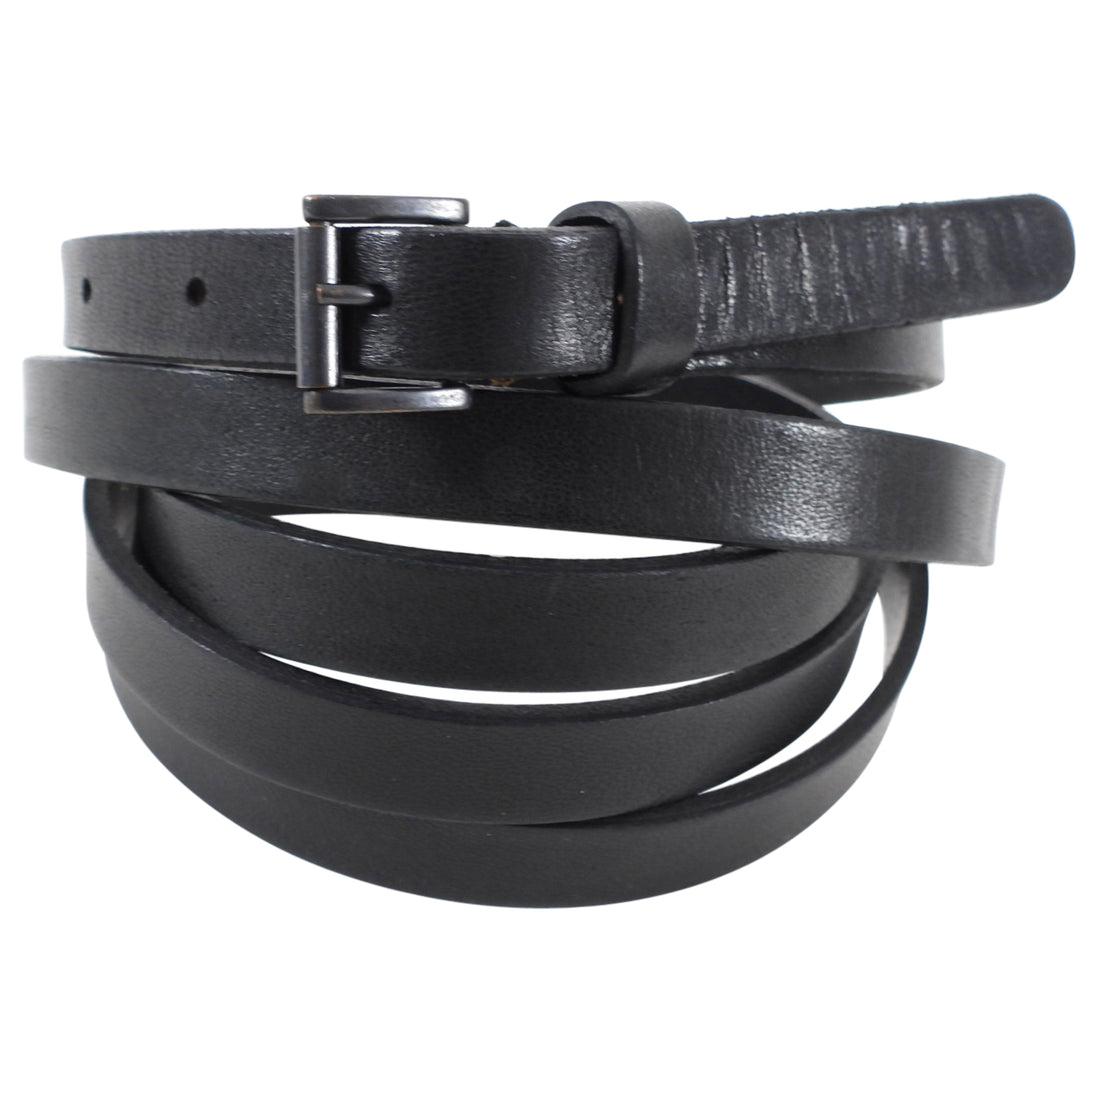 Haider Ackermann Black Leather Double Wrap Belt - L 30-34"